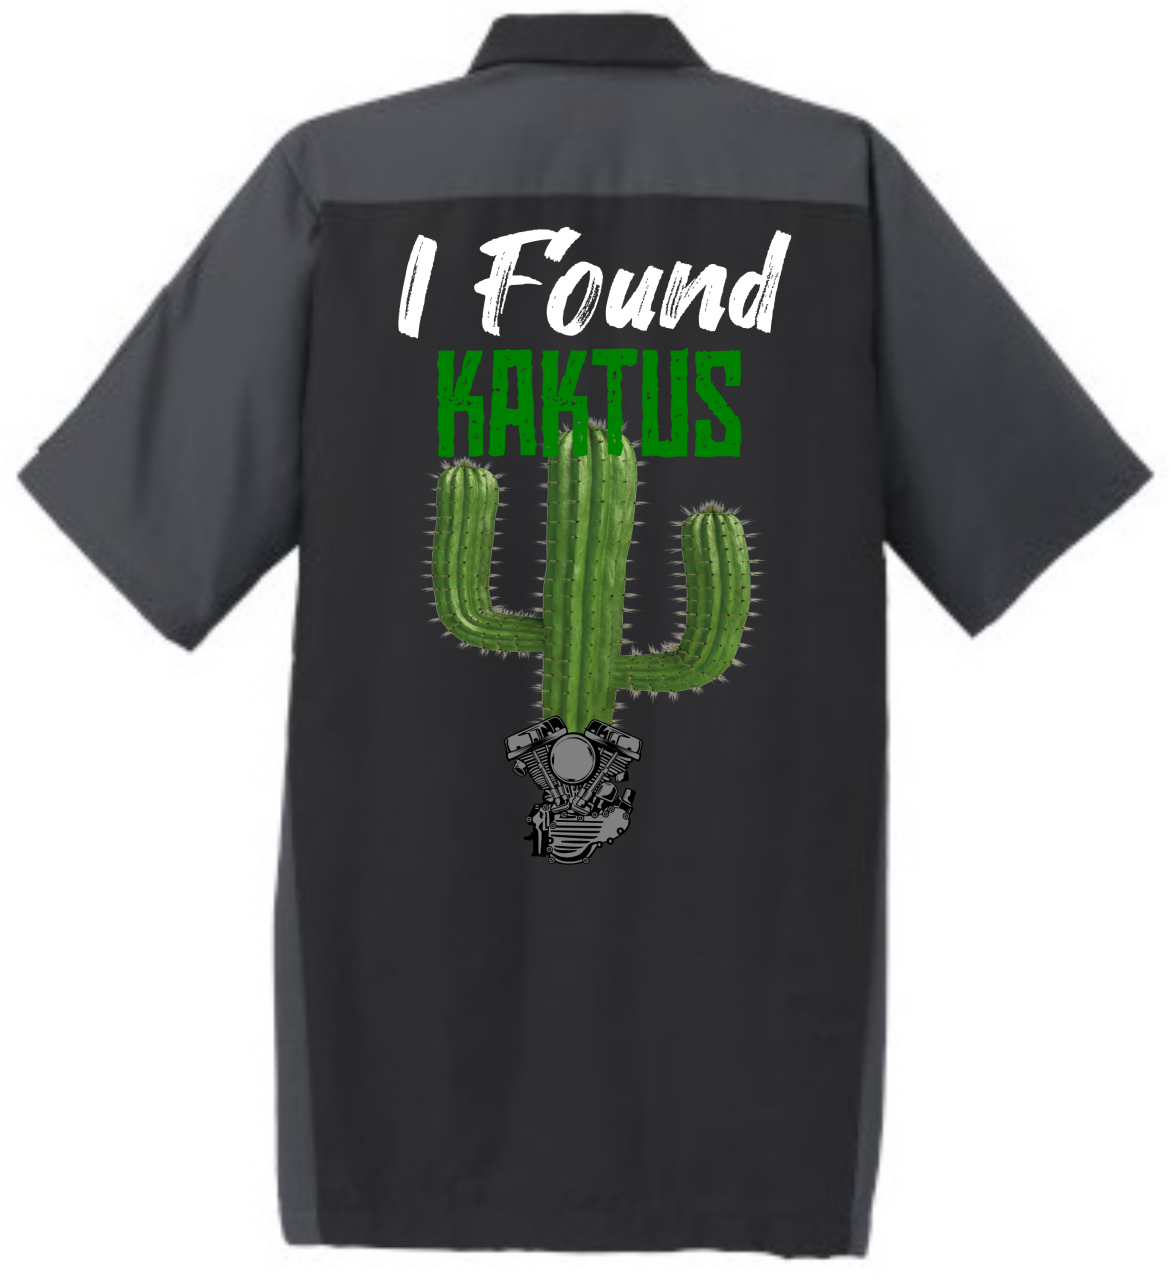 Picture of Kactus - I Found Kaktus - Shop Shirt